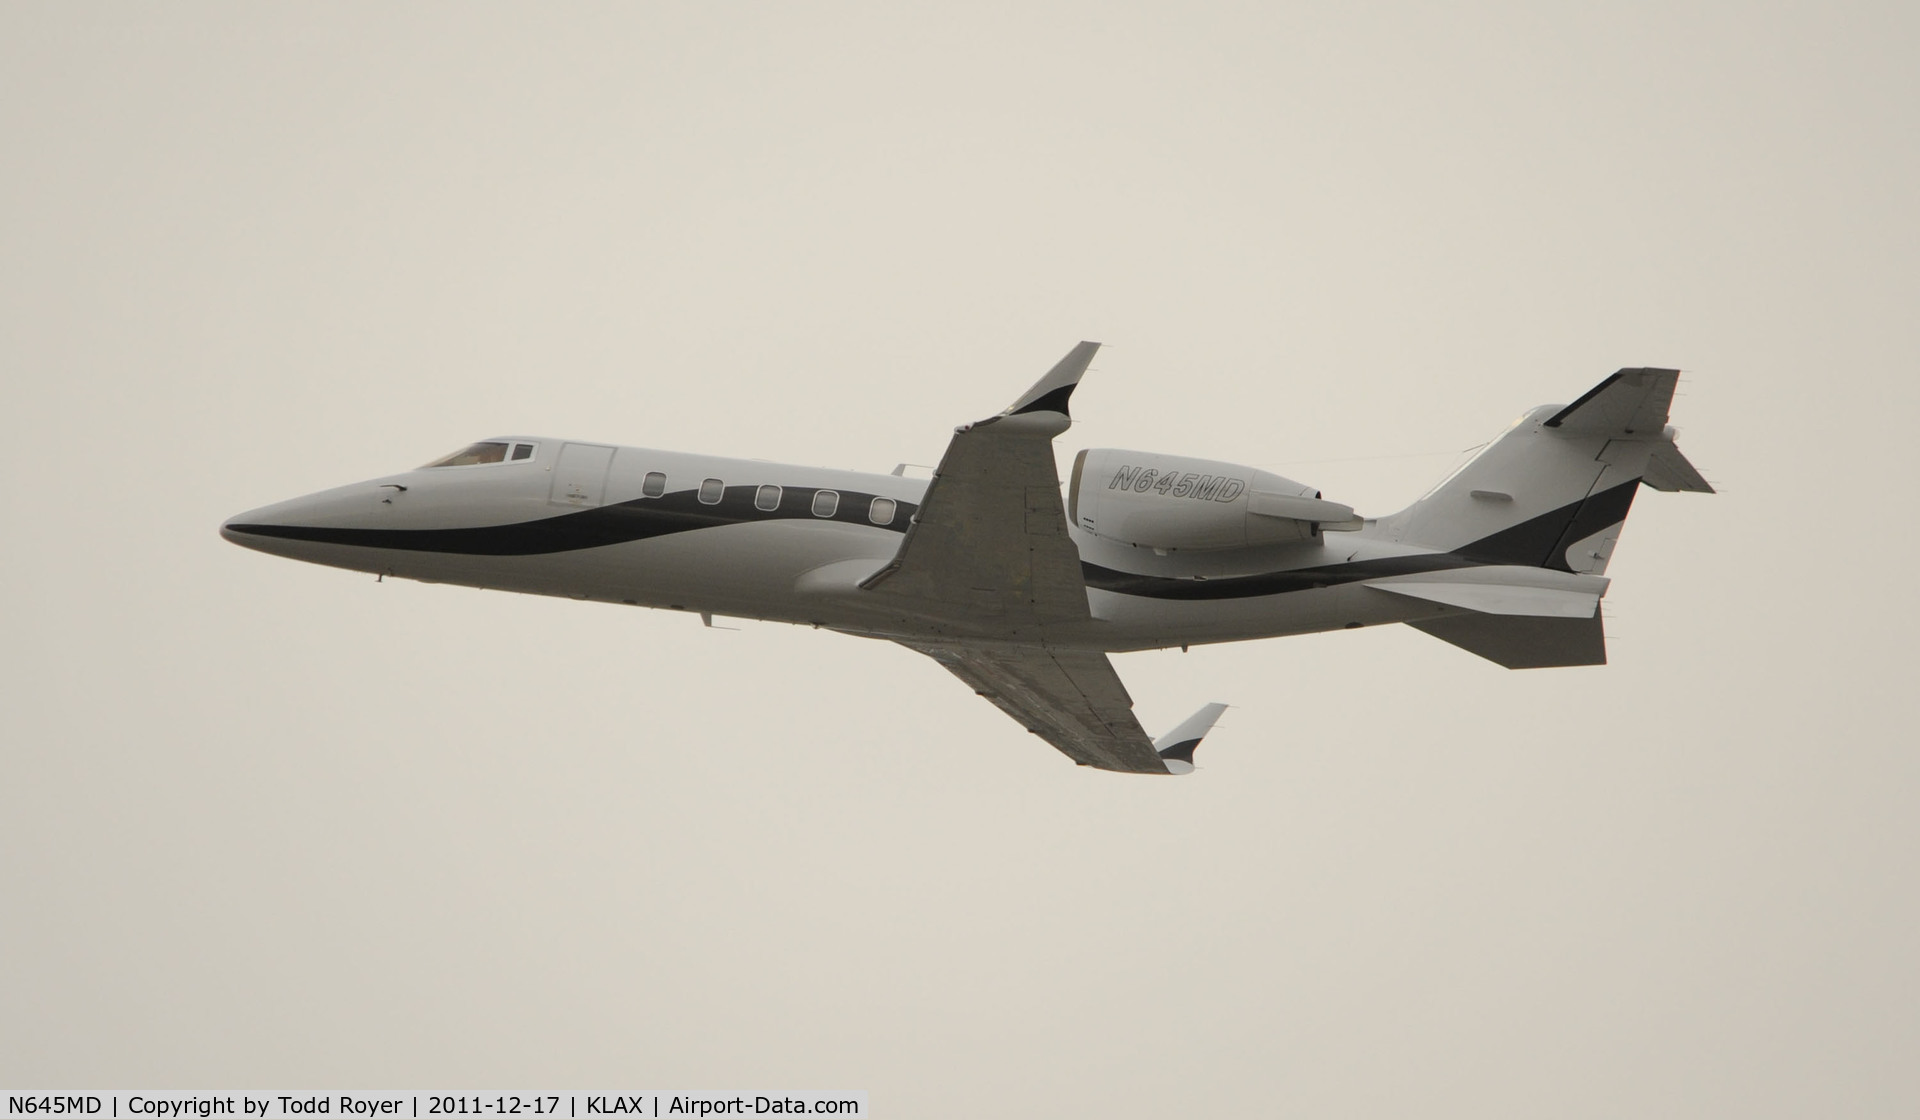 N645MD, 2002 Learjet 60 C/N 60-247, Departing LAX